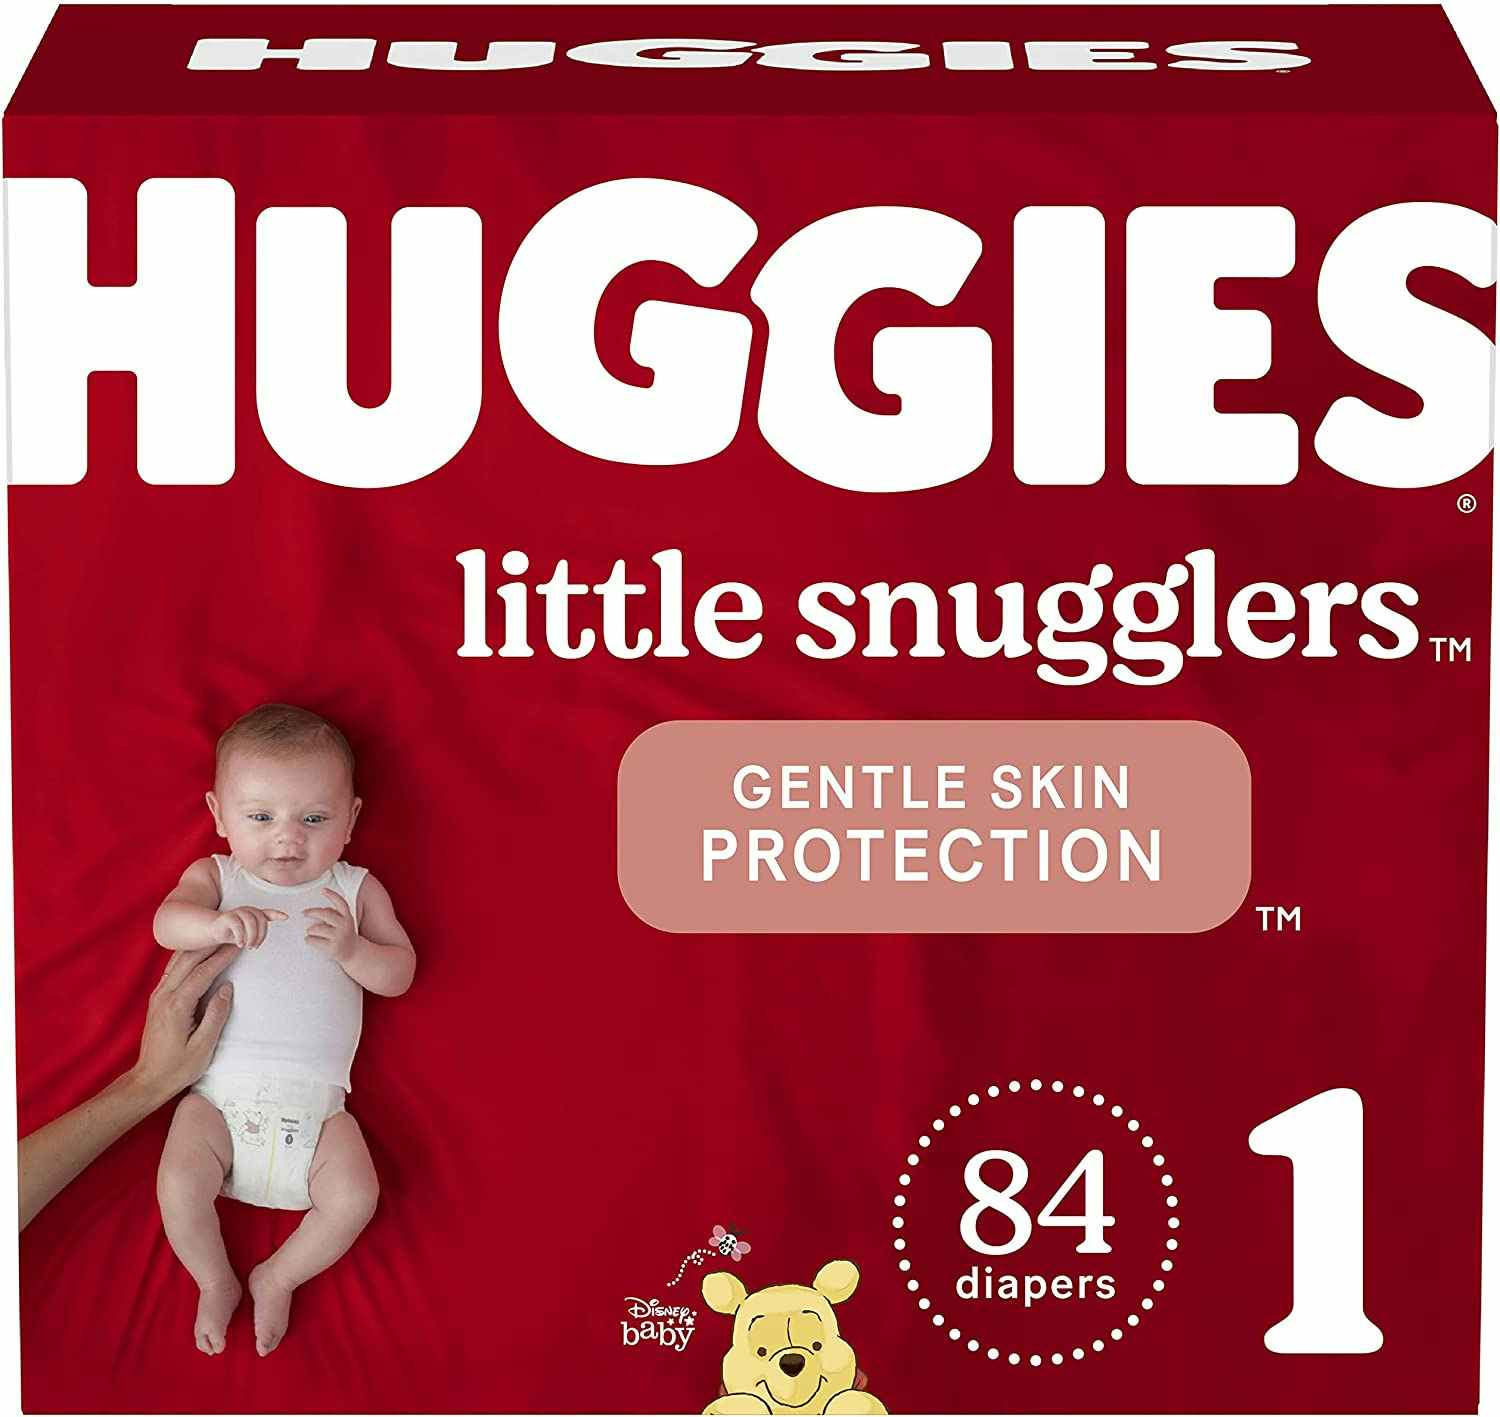 A box of Huggies diapers.